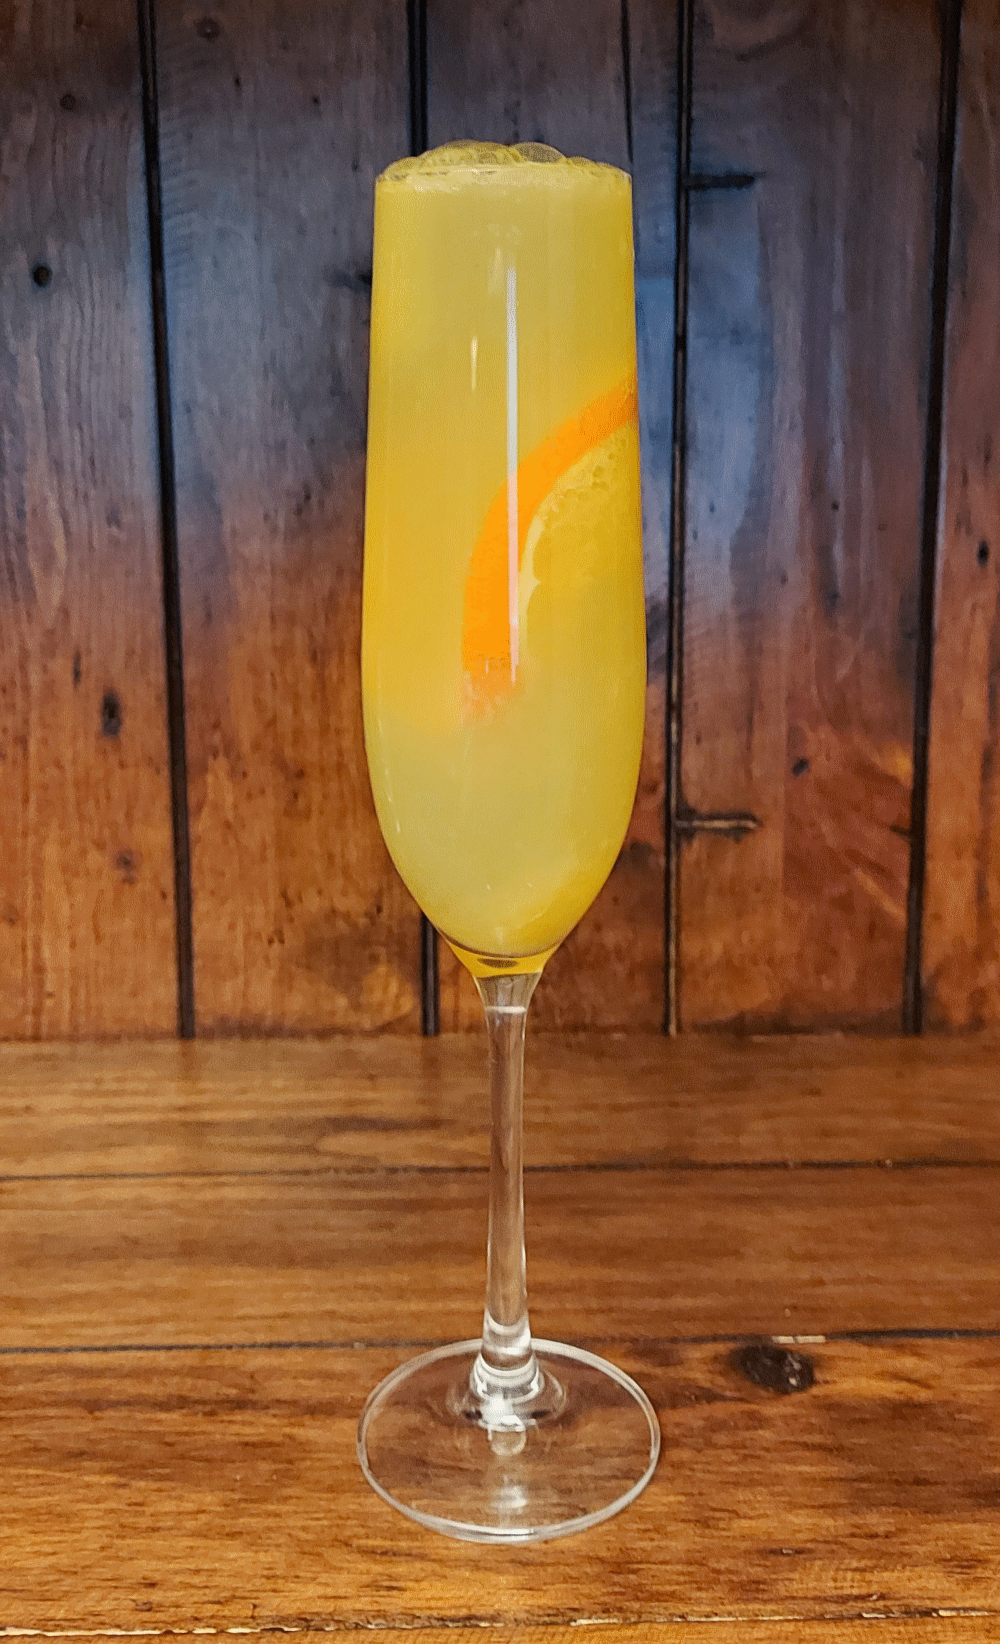 Orange Champagne Mule